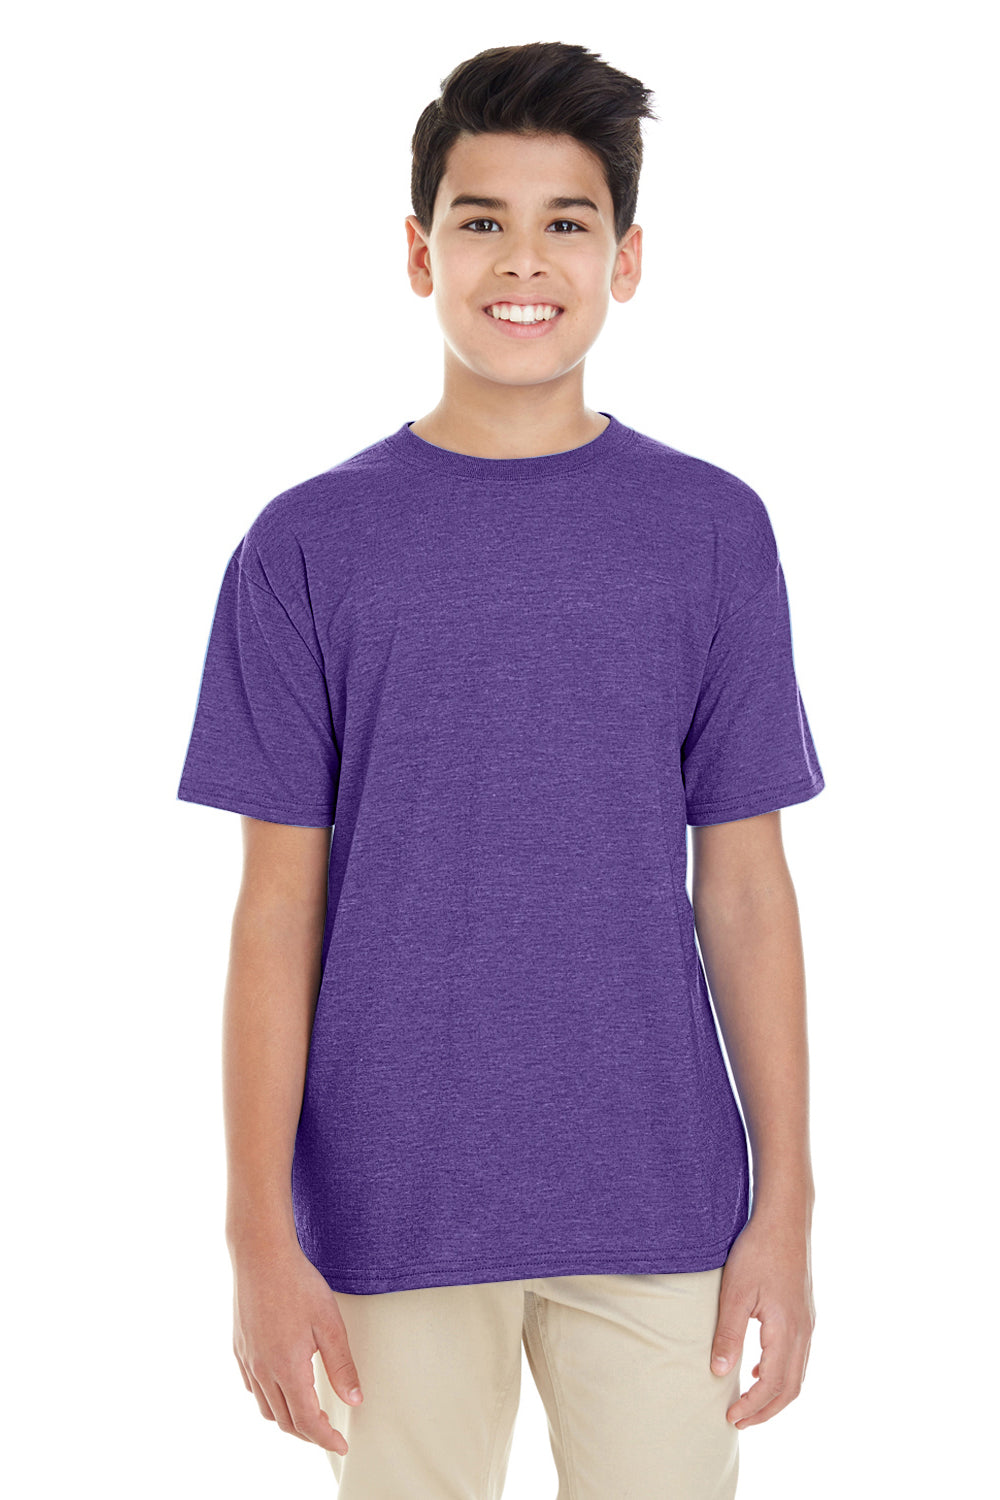 Gildan G645B Youth Softstyle Short Sleeve Crewneck T-Shirt Heather Purple Front